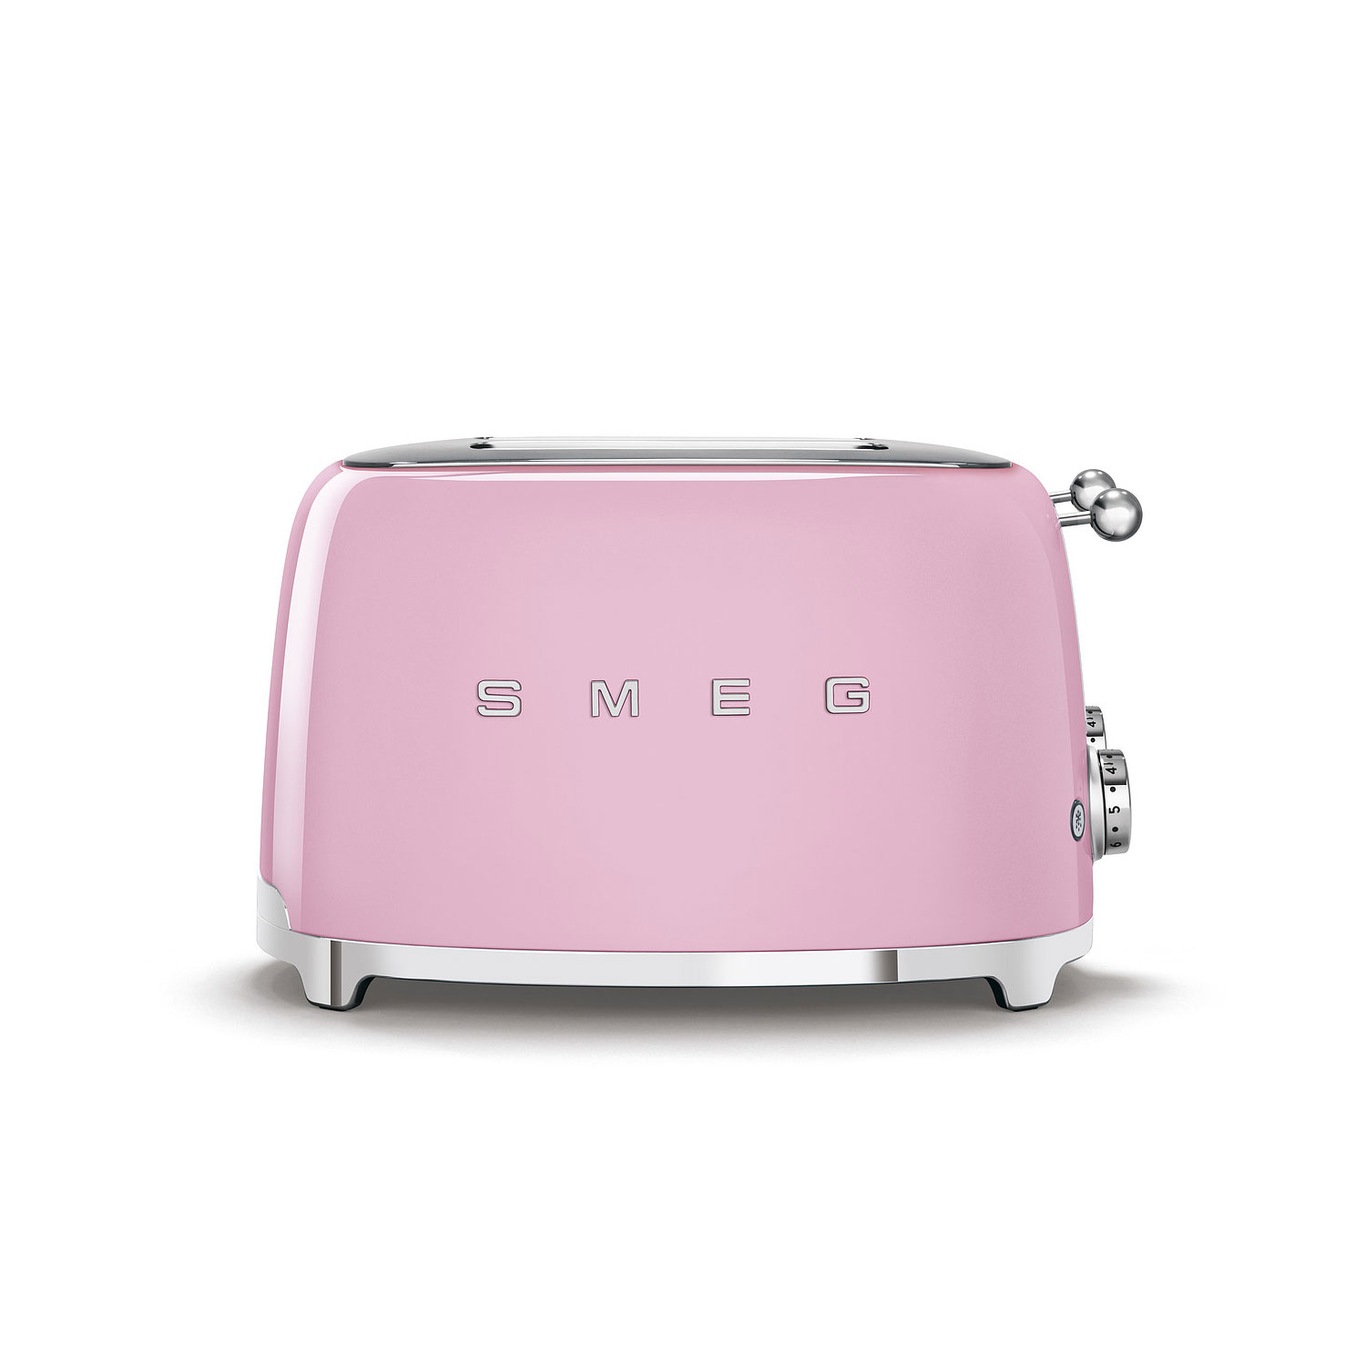 Retro Toaster 4 Slices, Pink